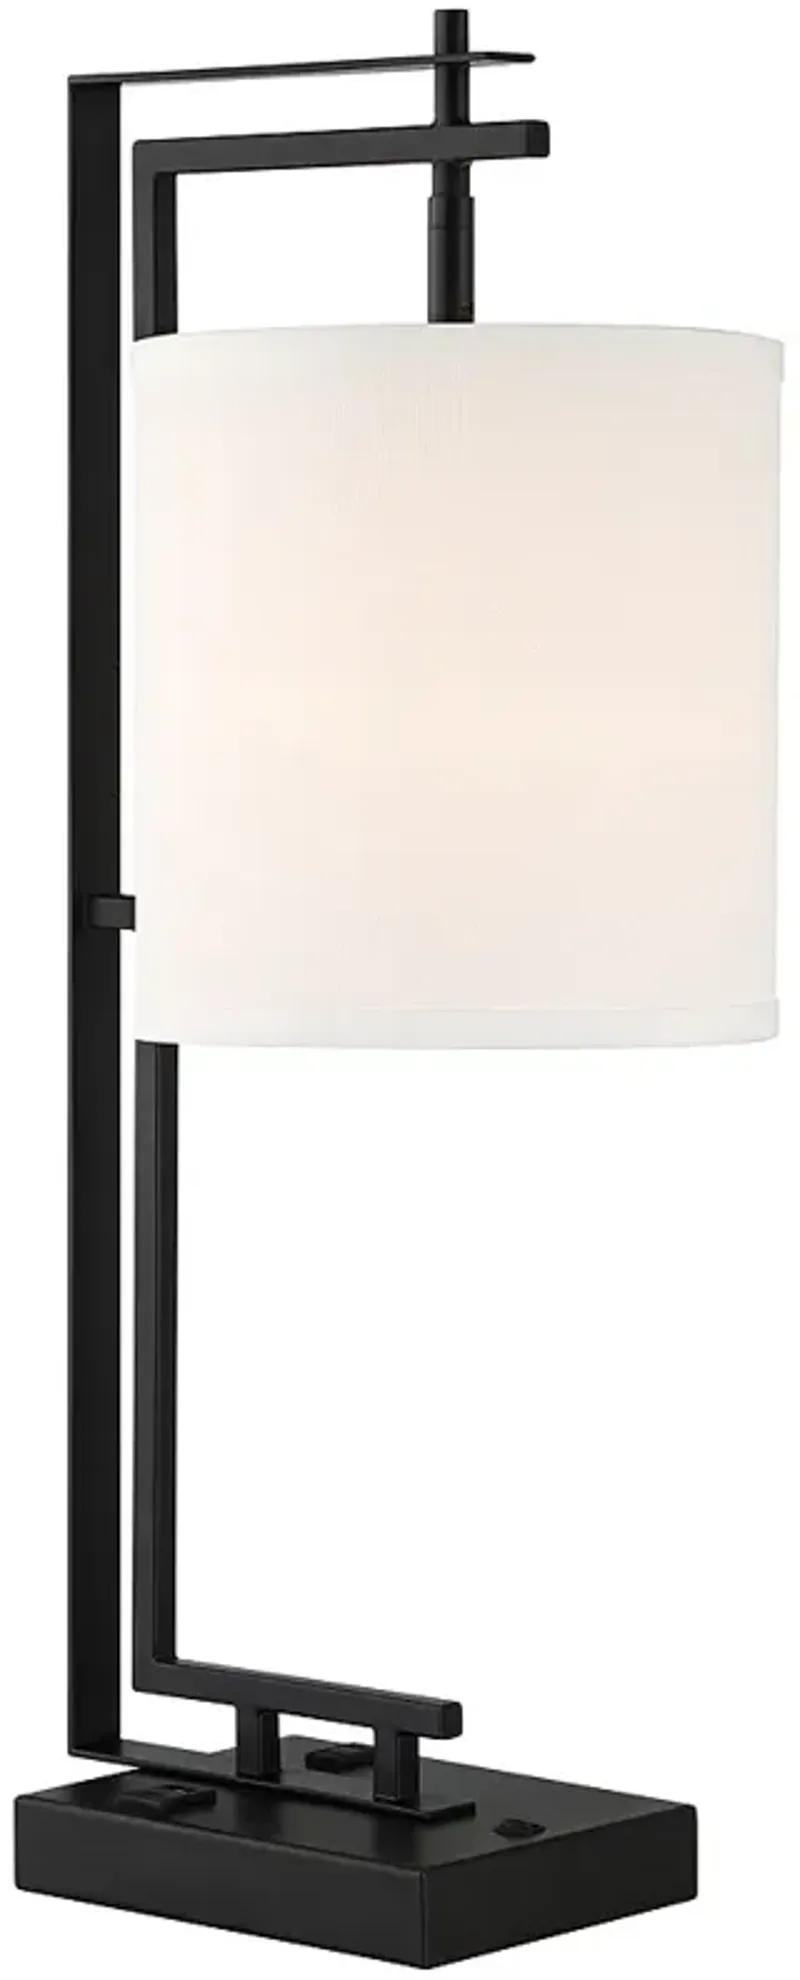 Possini Euro Covello 25" Modern Outlet and USB Desk Lamp